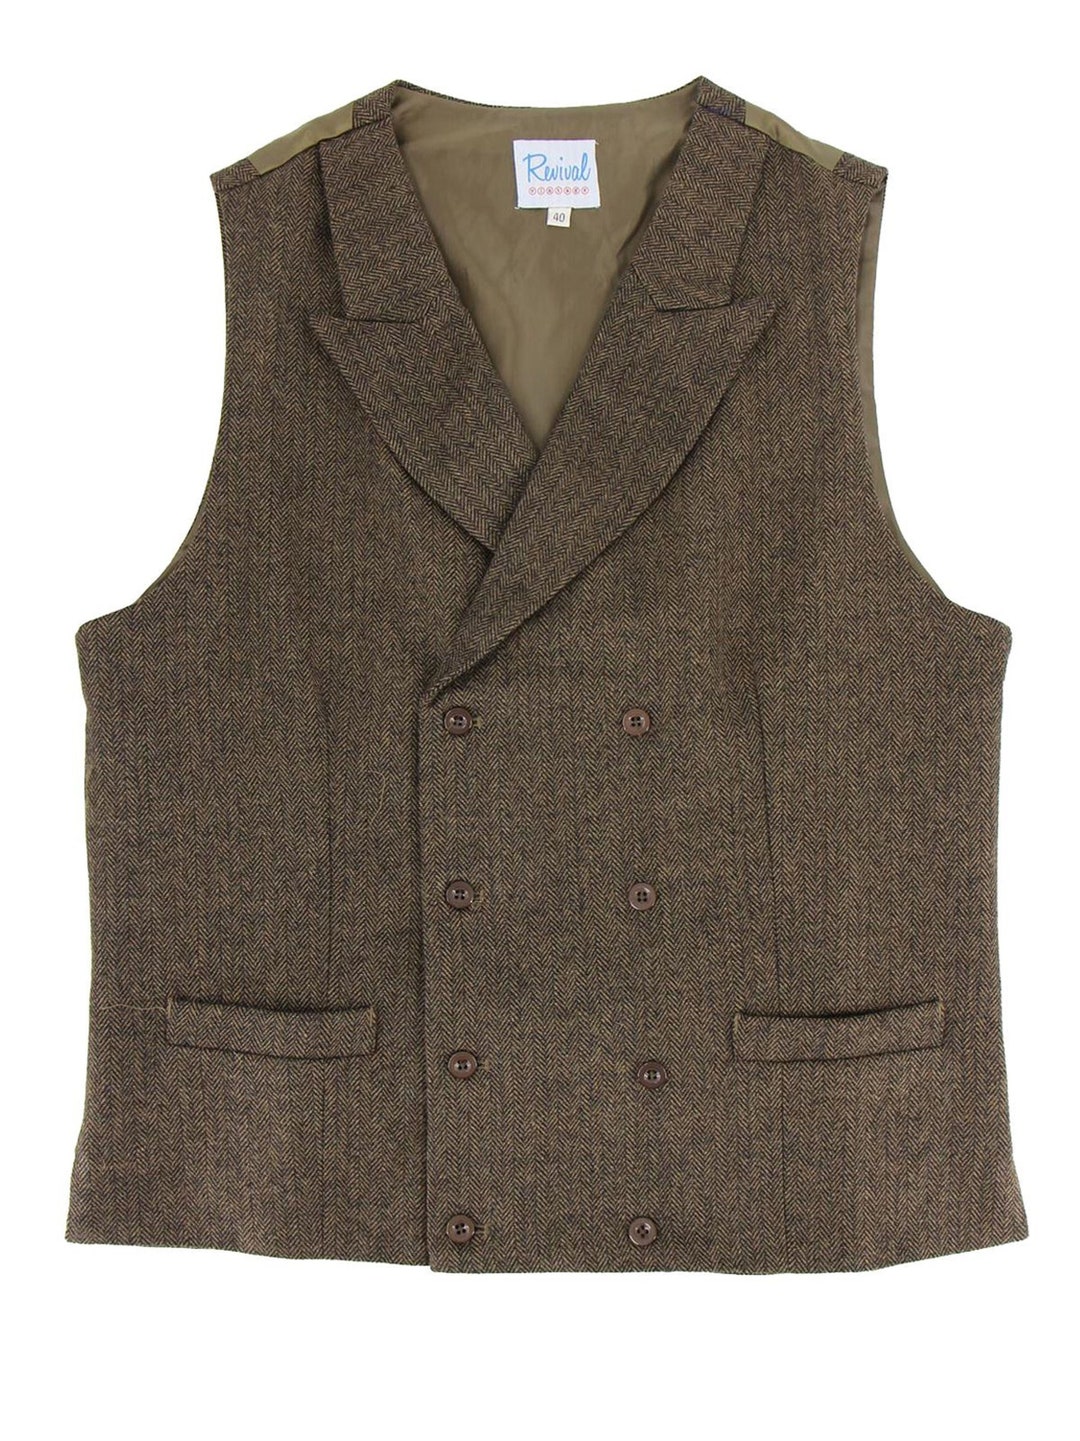 Herringbone Wool Waistcoat 1940s Style Authentic Vintage - Etsy